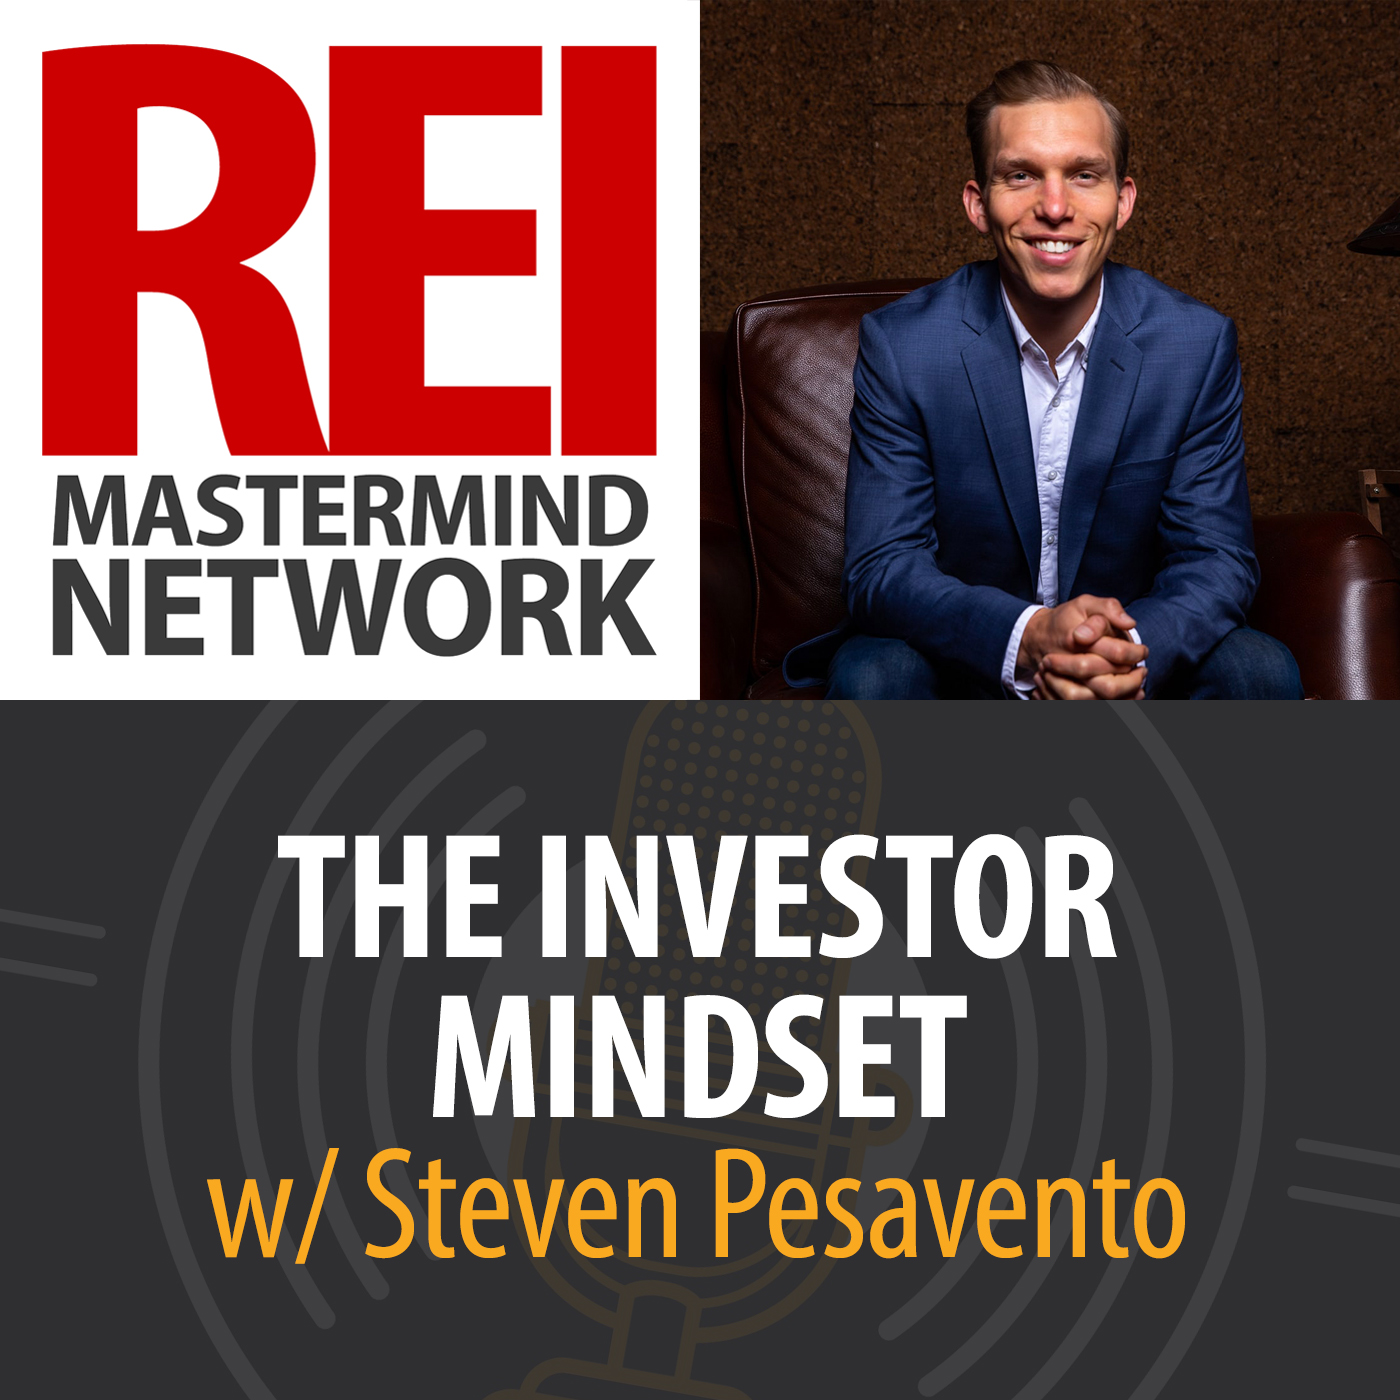 The Investor Mindset with Steven Pesavento Image